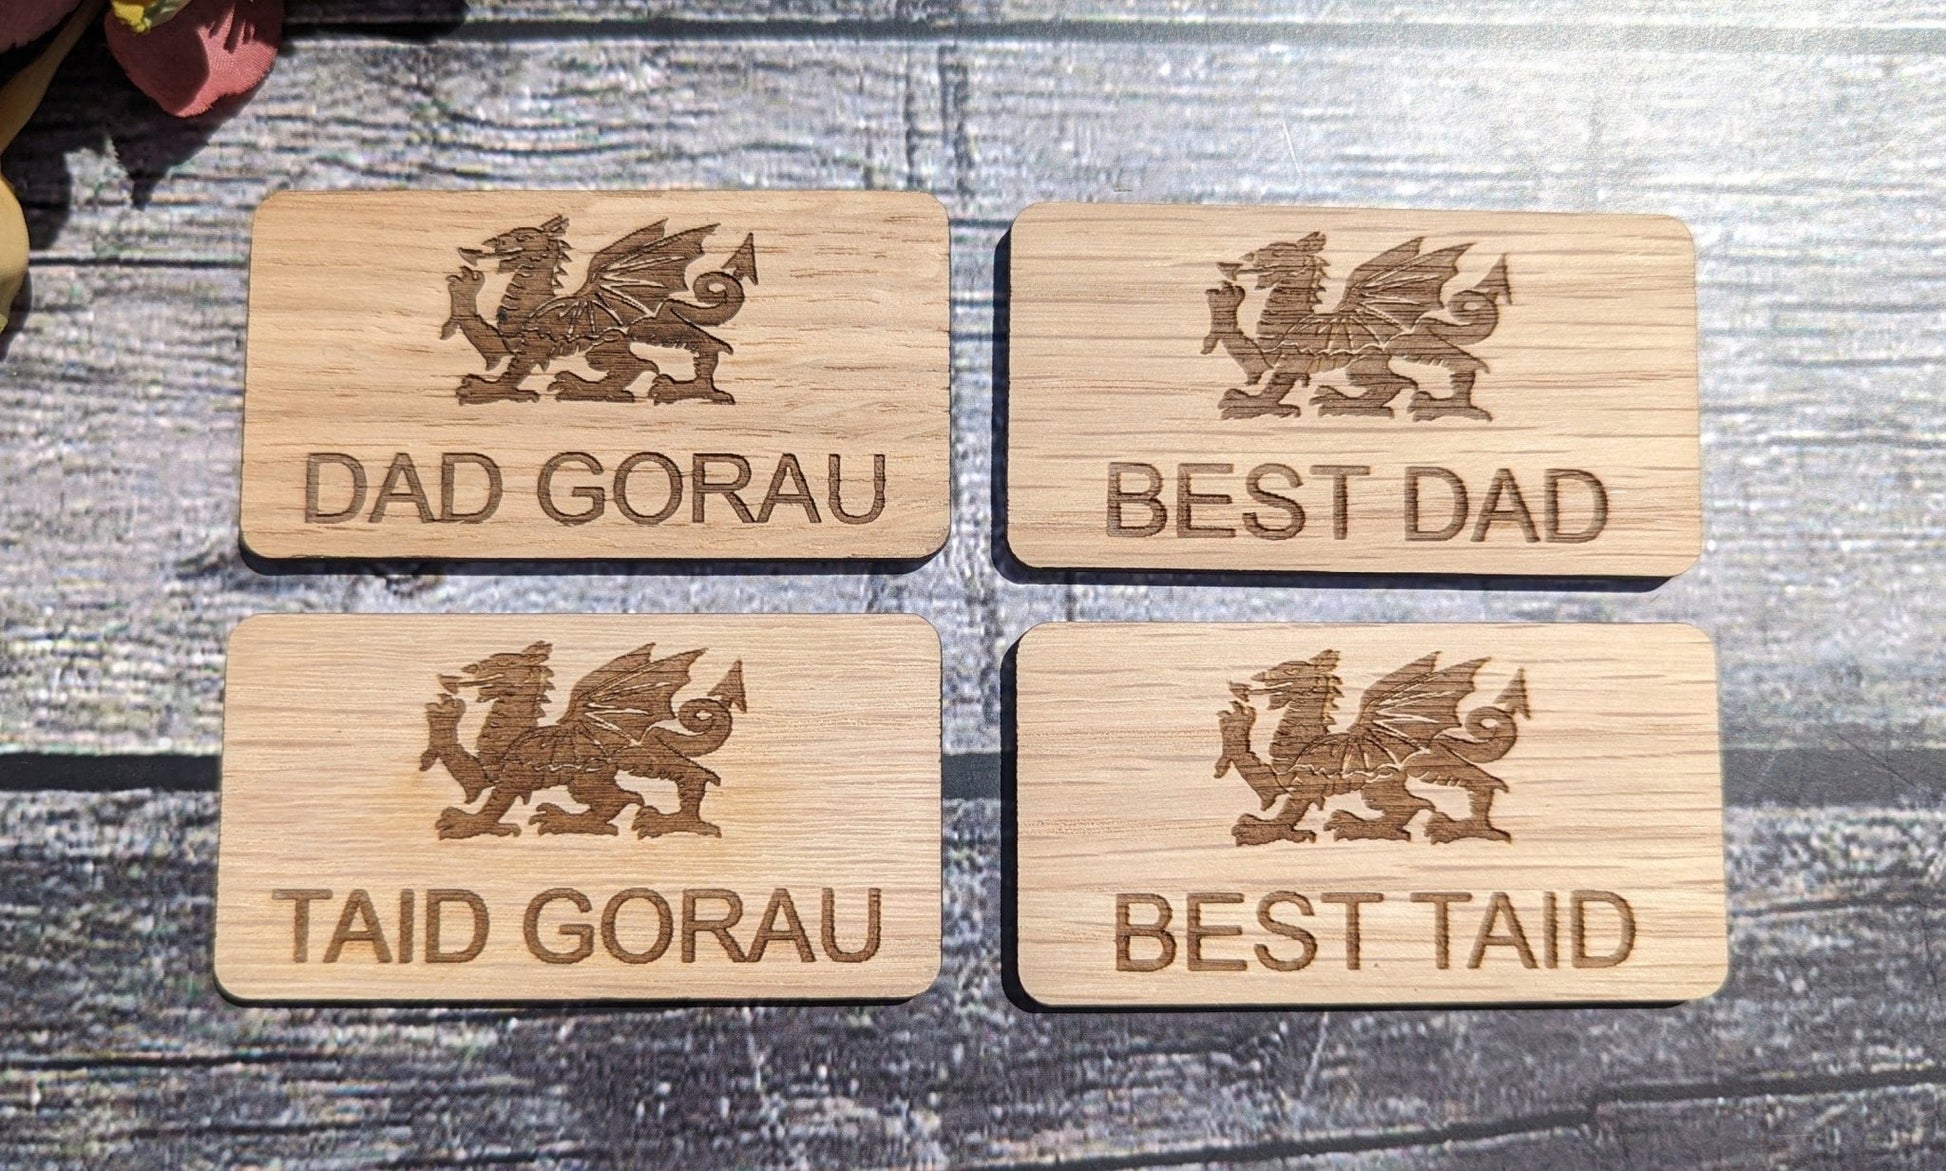 Fun Welsh Wooden Name Badges | Best Dad, Best Taid, Dad Gorau, Taid Gorau - CherryGroveCraft